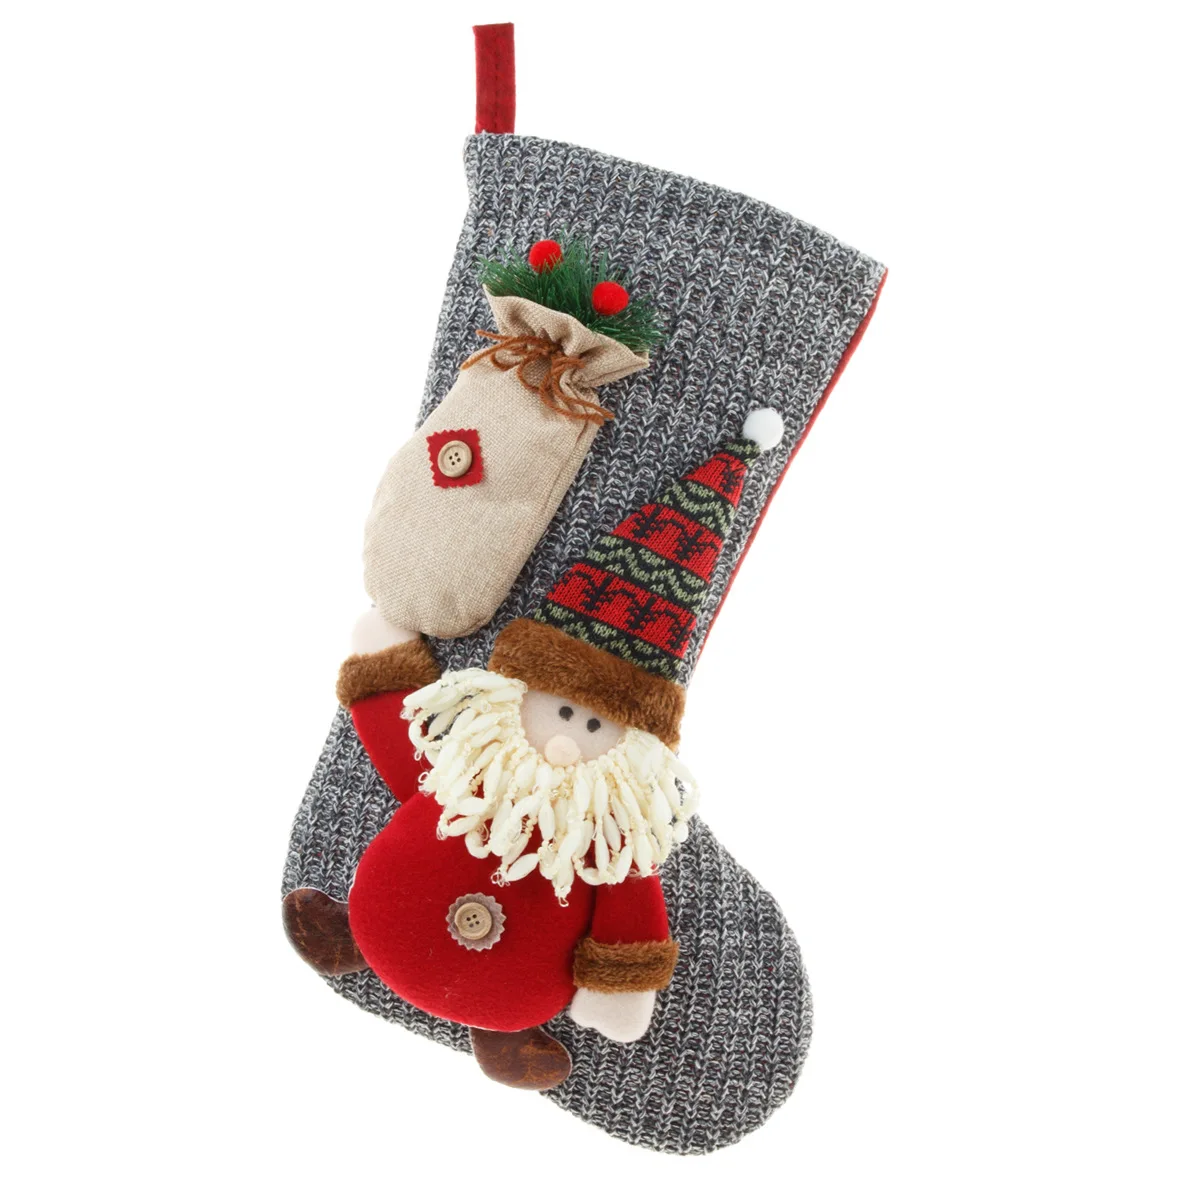 Decorative Christmas Socks Wholesale Christmas Gift Bag 3D Christmas Snowman Reindeer Old Man Knit Stocking For Home Decor